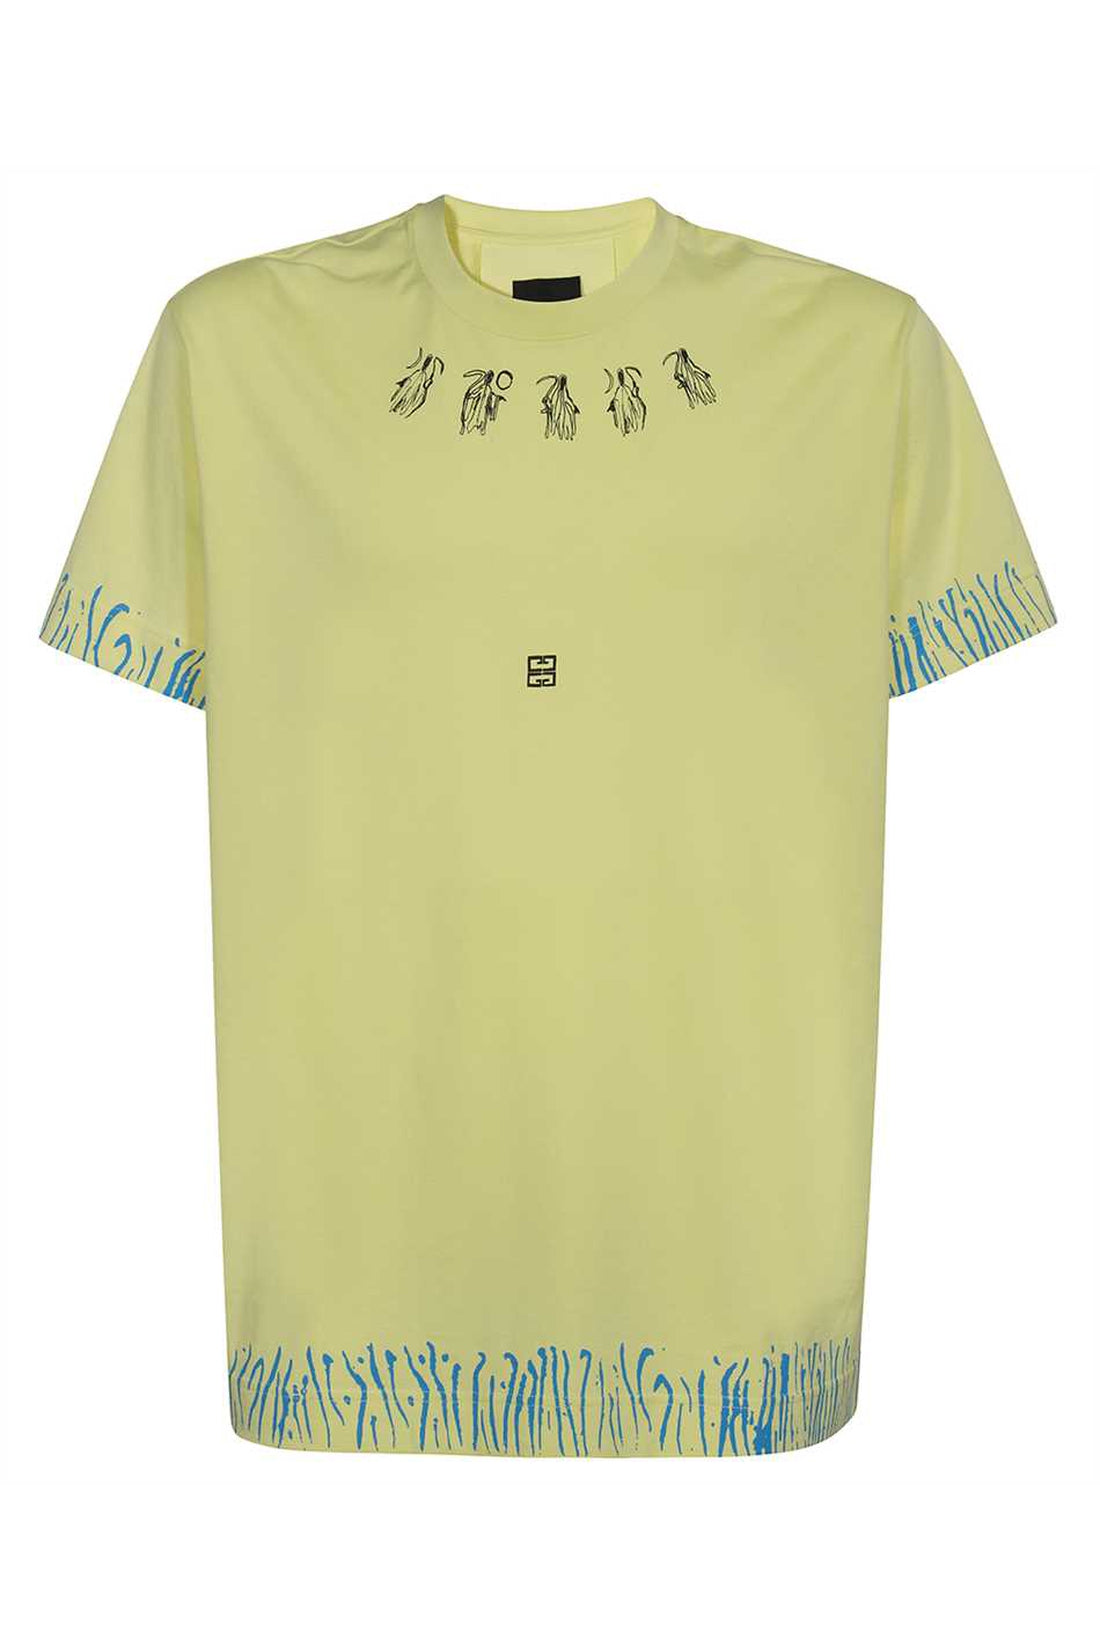 Givenchy-OUTLET-SALE-Printed cotton T-shirt-ARCHIVIST